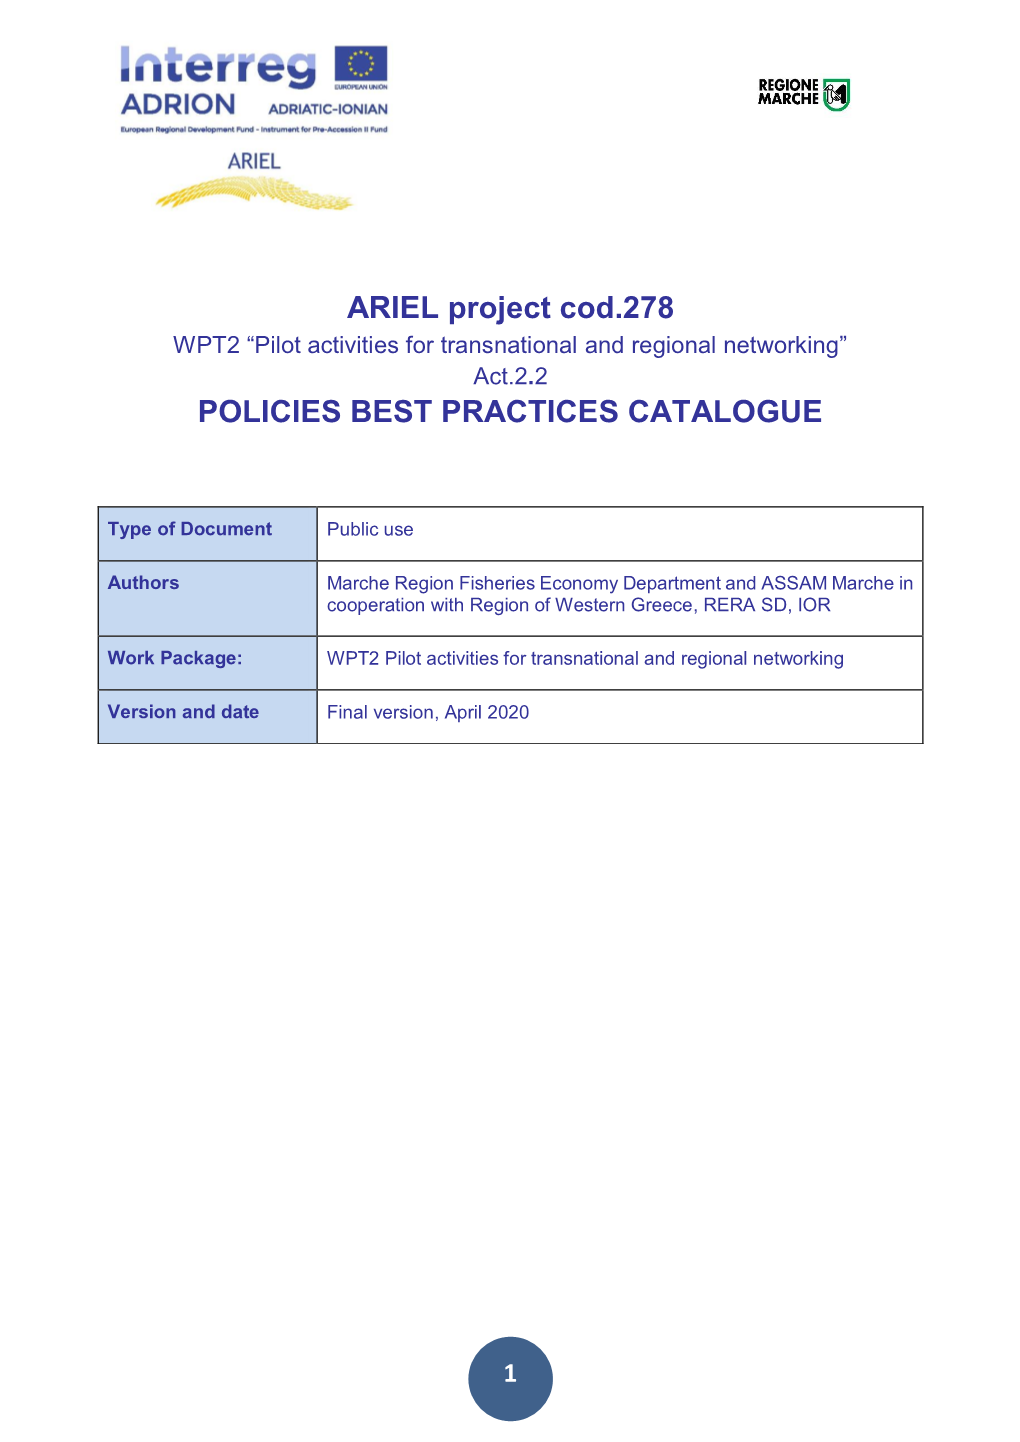 ARIEL Project Cod.278 POLICIES BEST PRACTICES CATALOGUE